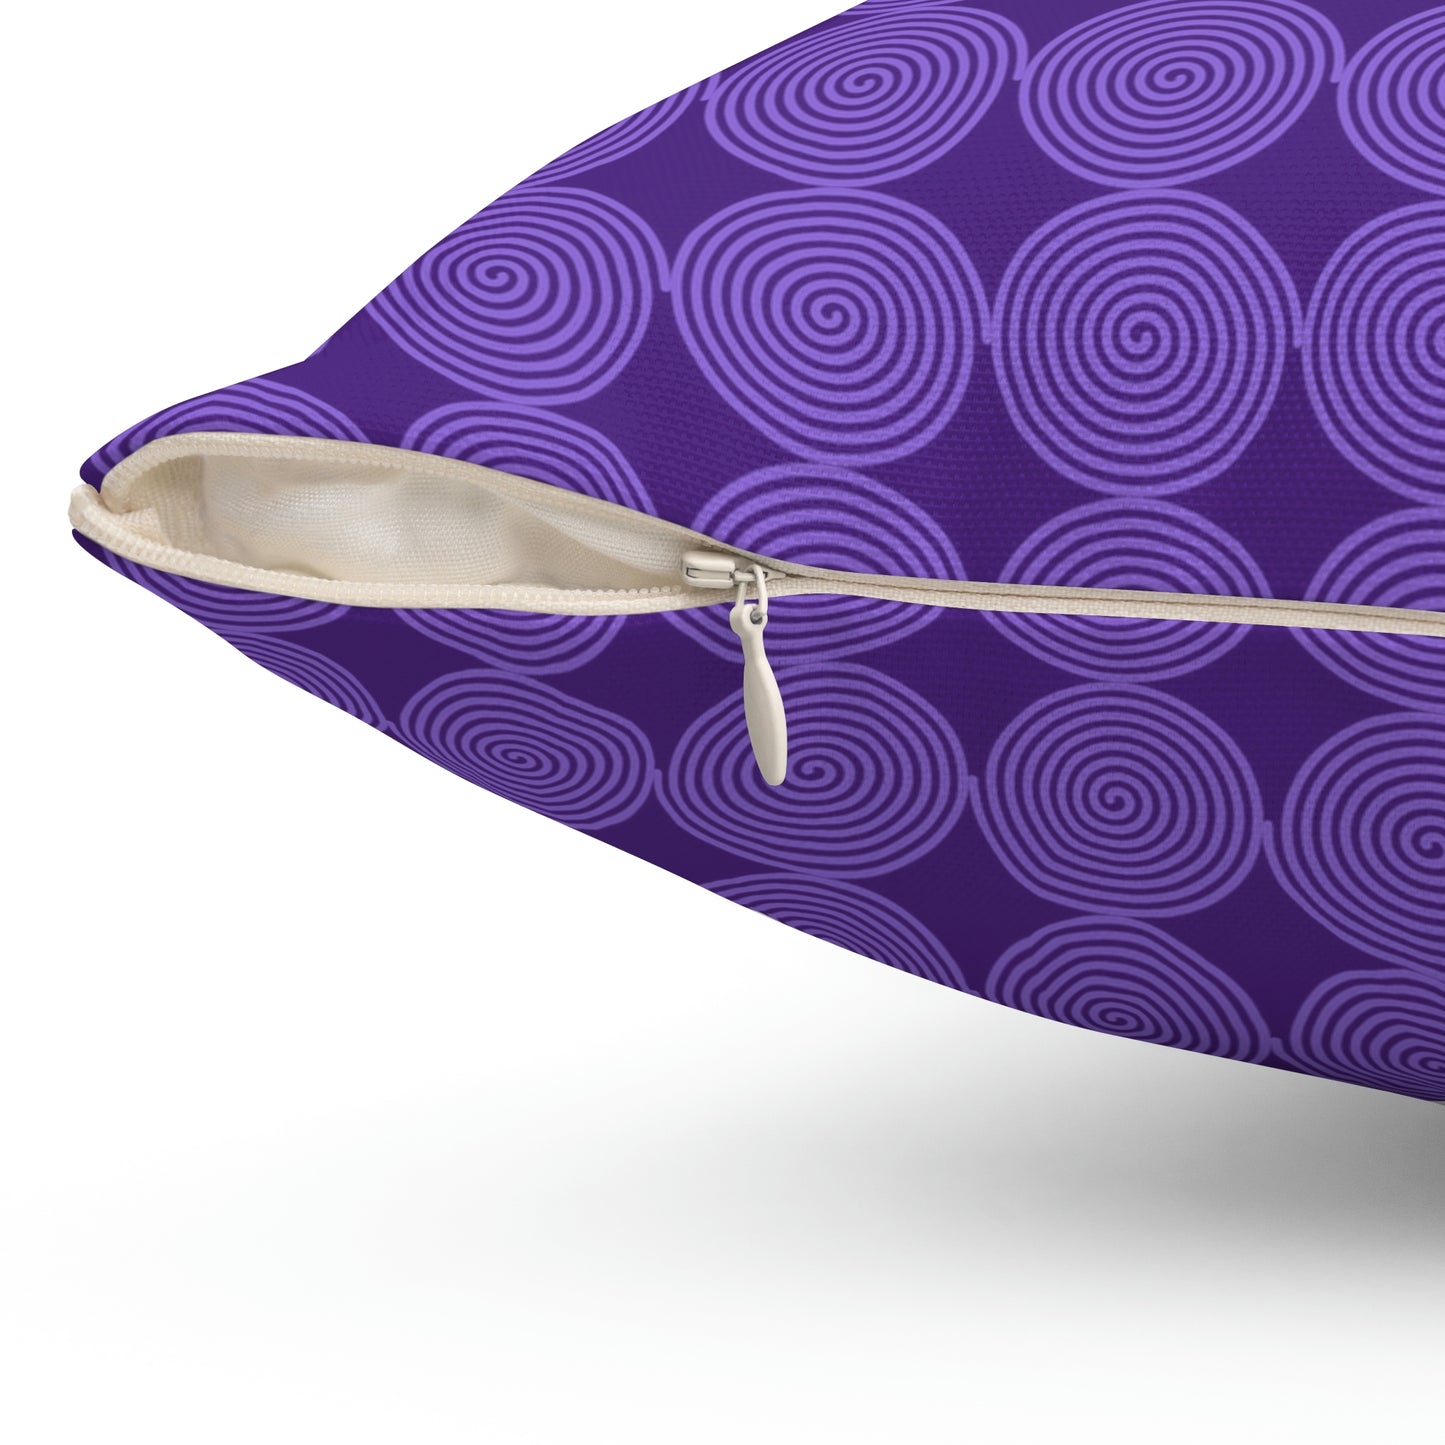 Spun Polyester Square Pillow Case ”Purple Spiral on Purple”